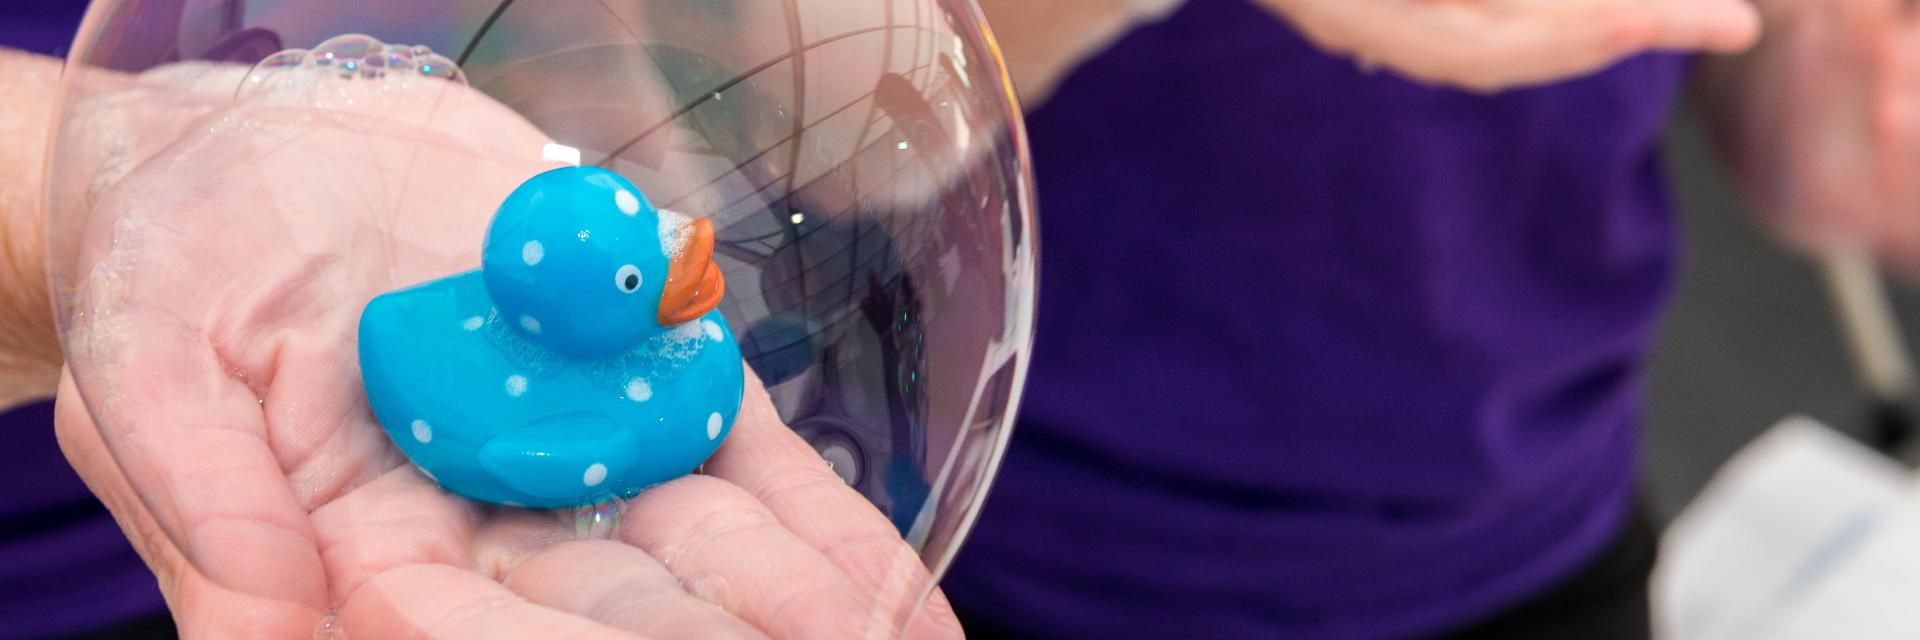 Celebrate Science festival volunteers holding rubber ducks in bubbles